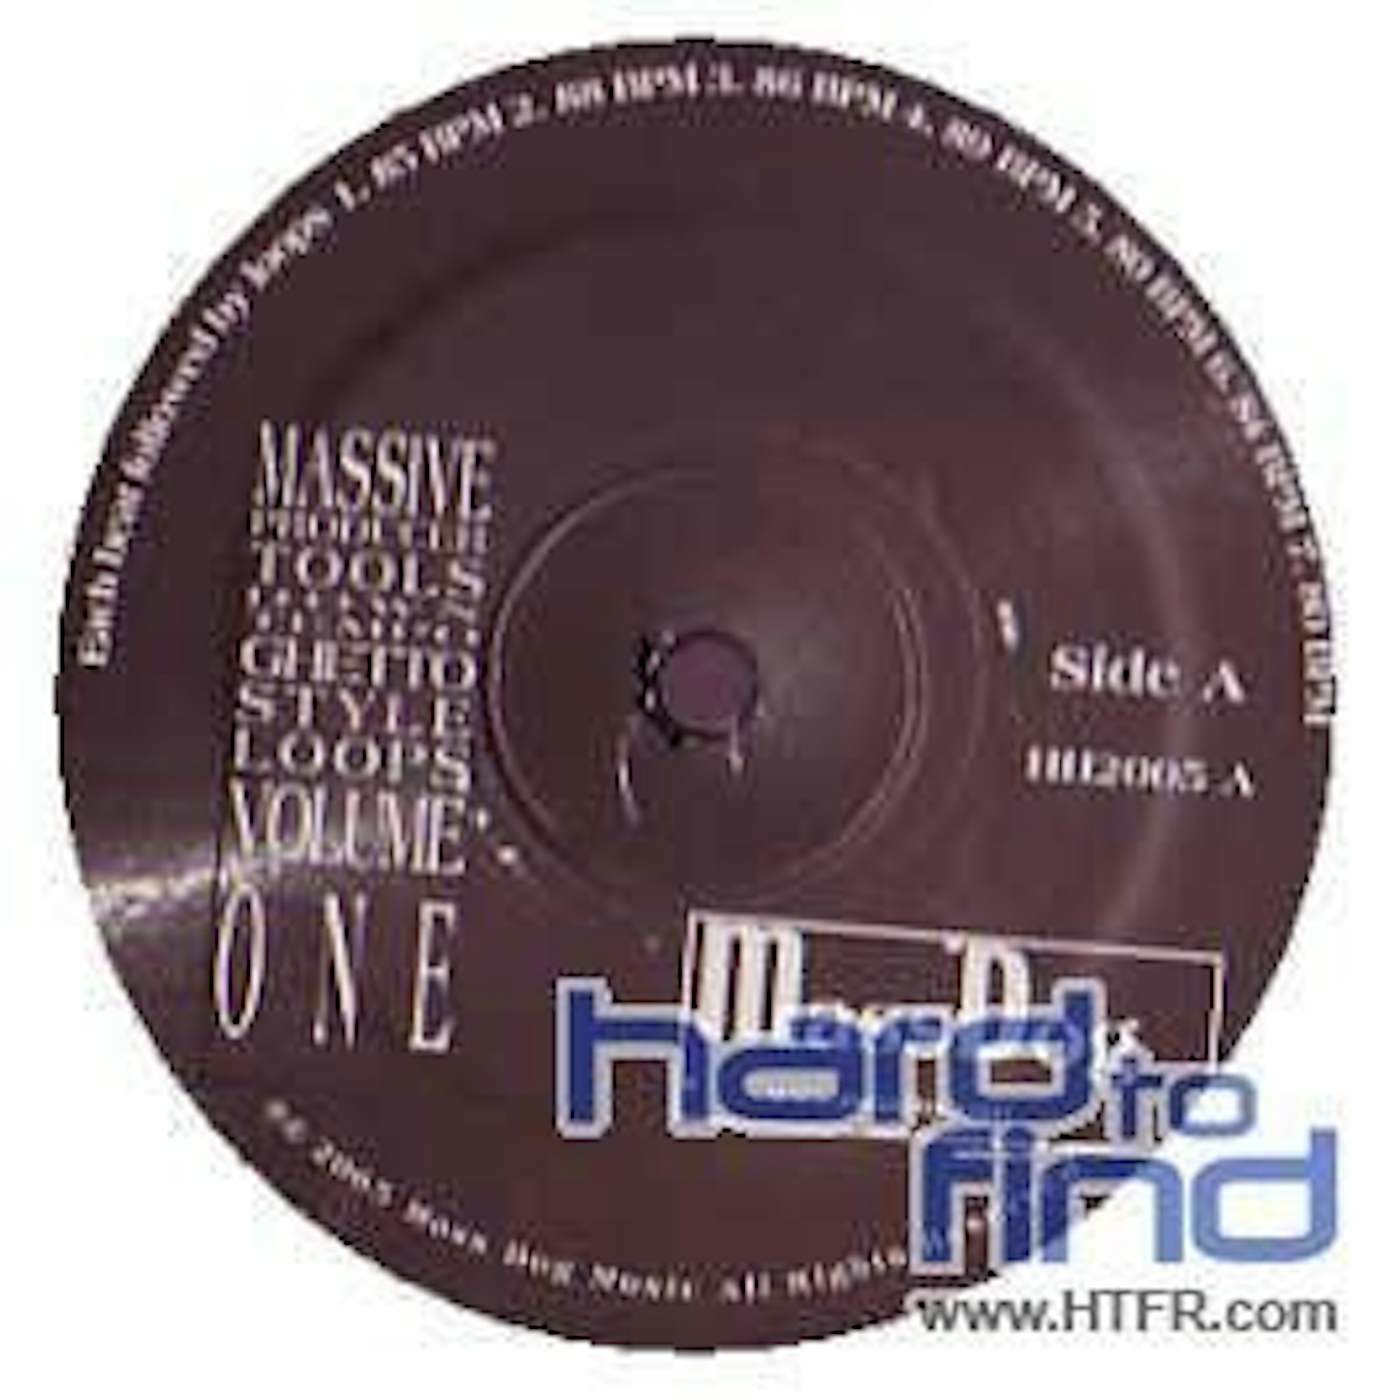 Massive PRODUCER TOOLS (GHETTO LOOPS) Vinyl Record